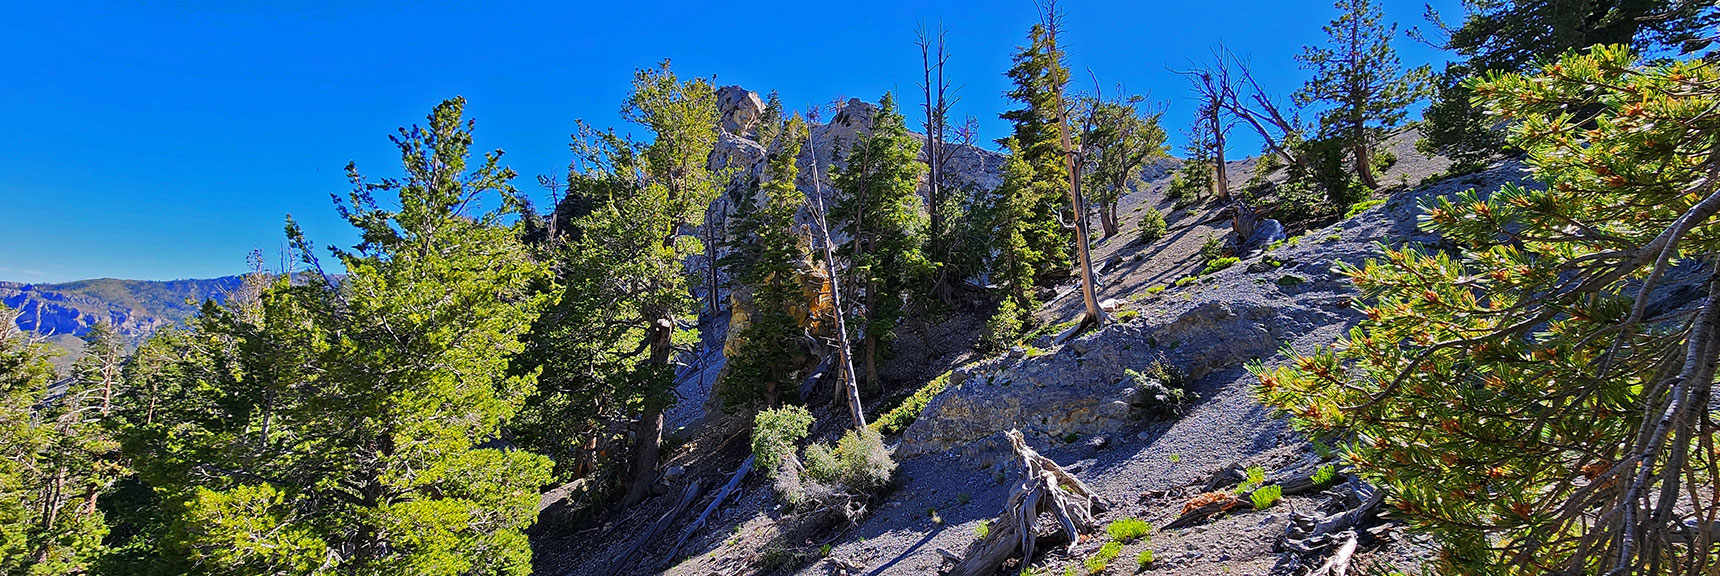 Begin Descent Closer to Rocky Pillars Area | Fletcher Canyon / Fletcher Peak / Cockscomb Ridge Circuit | Mt. Charleston Wilderness | Spring Mountains, Nevada